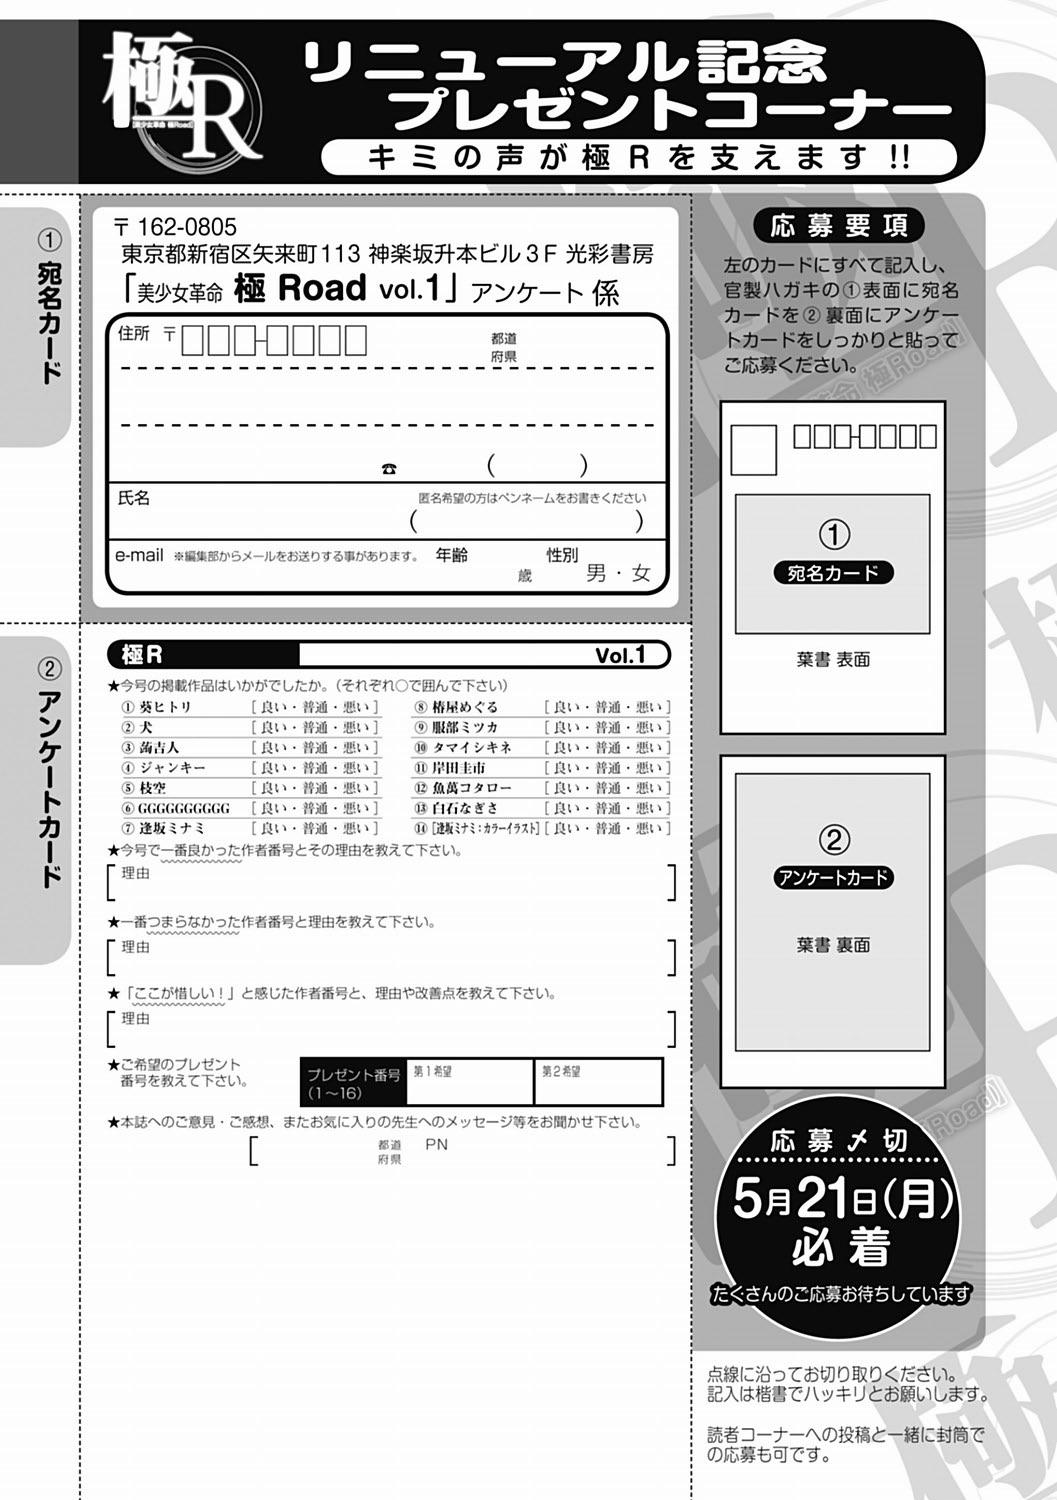 Bishoujo Kakumei KIWAME Road 2012-06 Vol.1 258